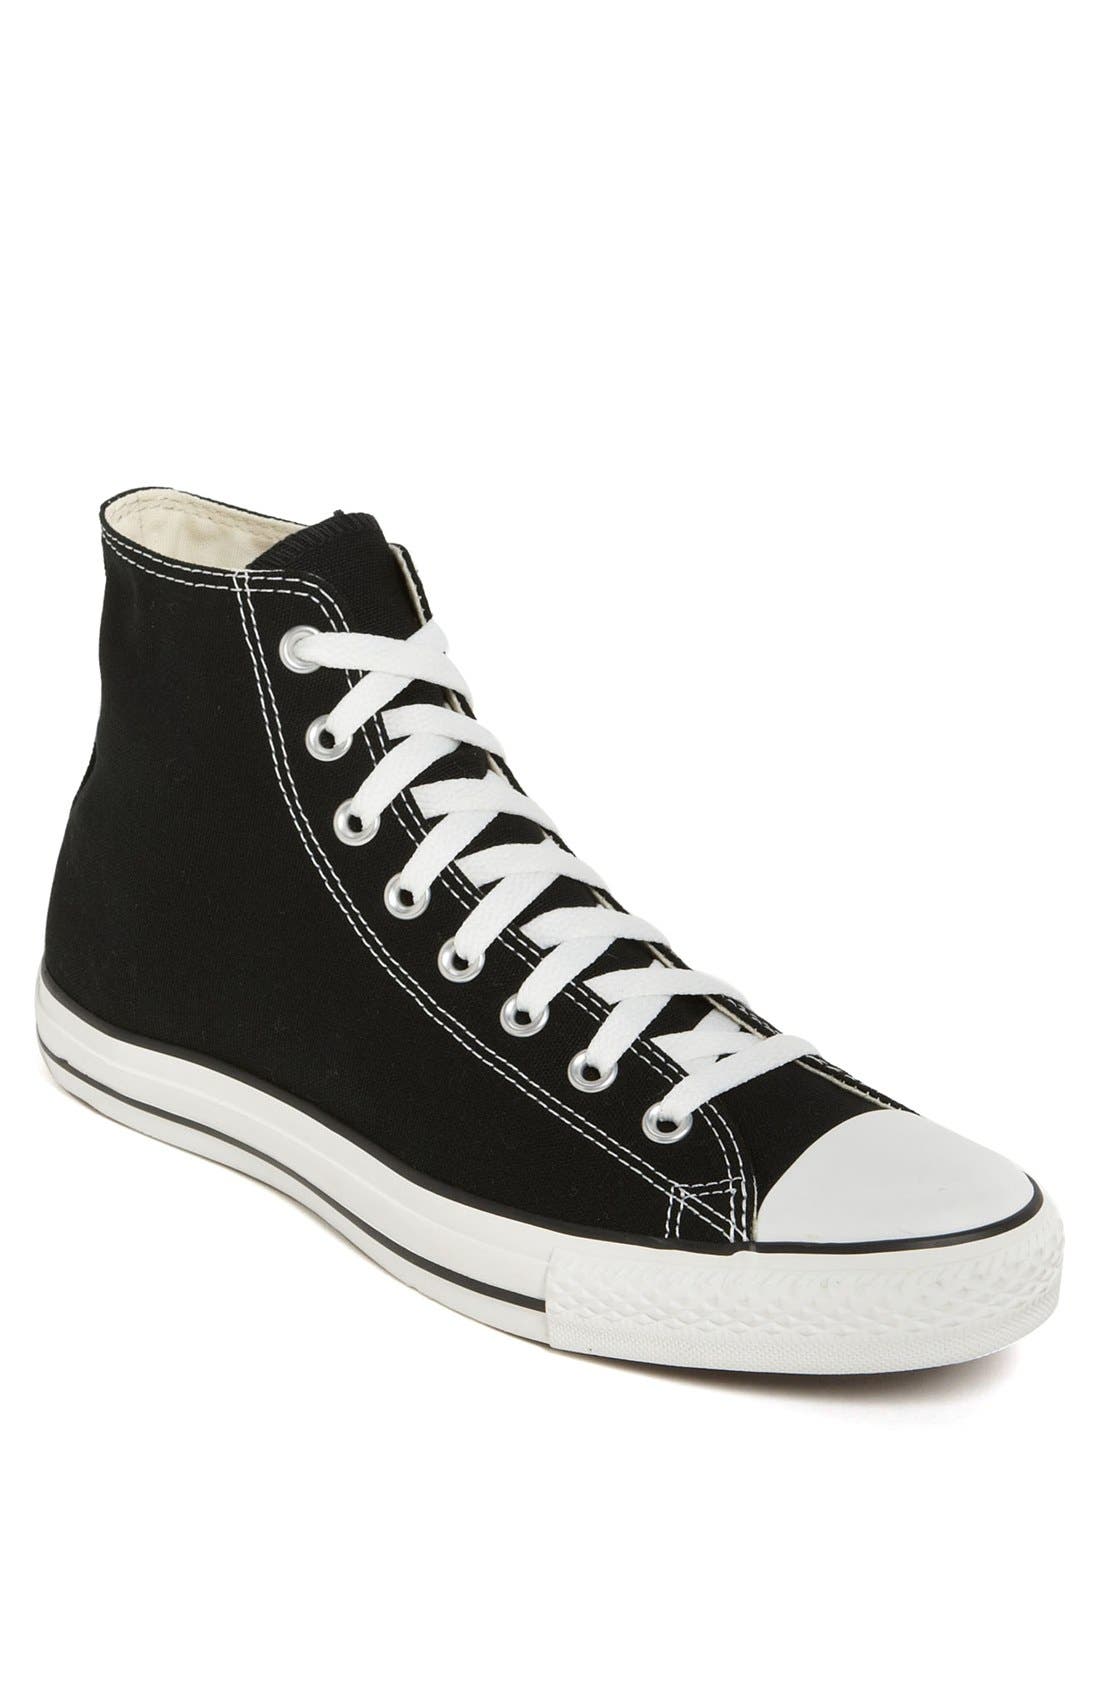 Converse Topman \u0026 Trend Shoes for Men 